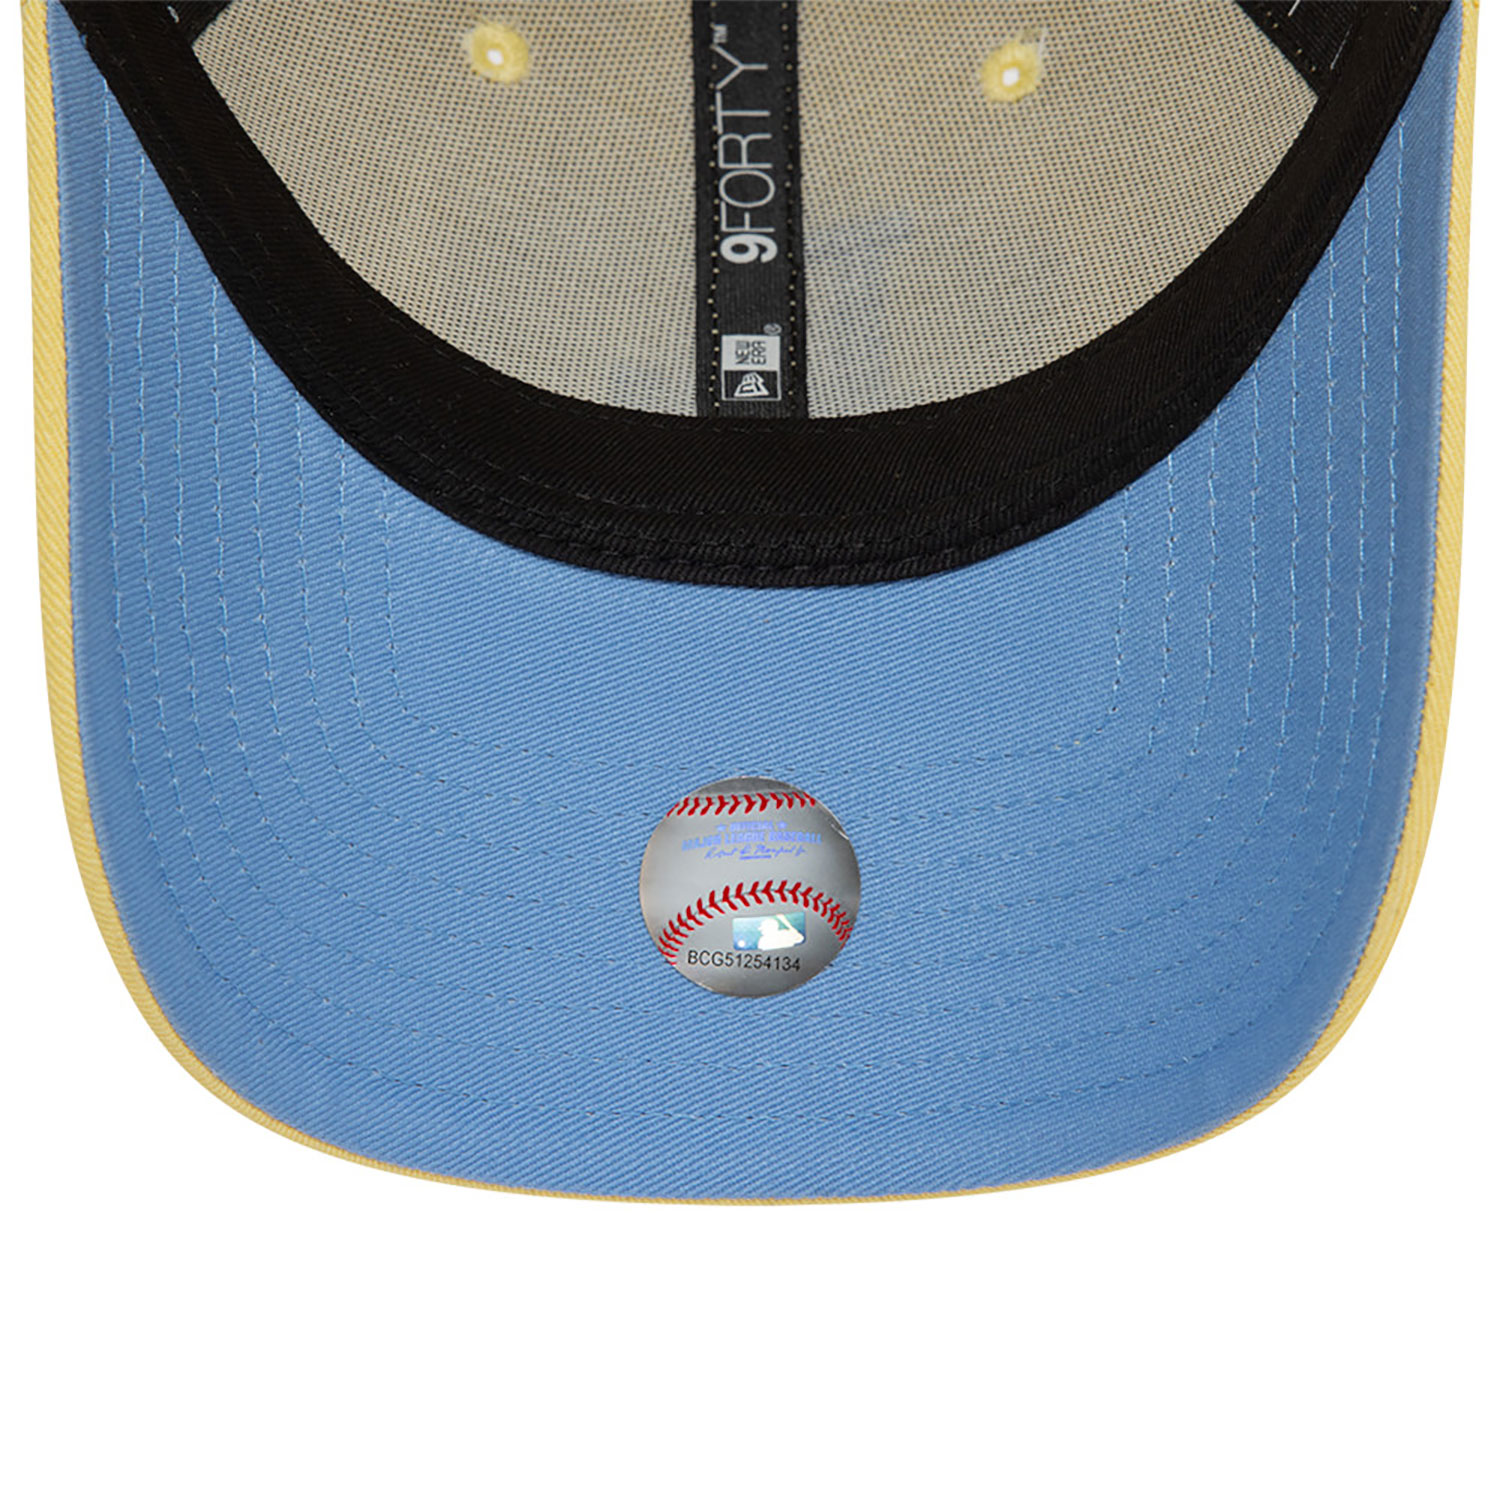 LA Dodgers Bright Pop Pastel Yellow 9FORTY Adjustable Cap